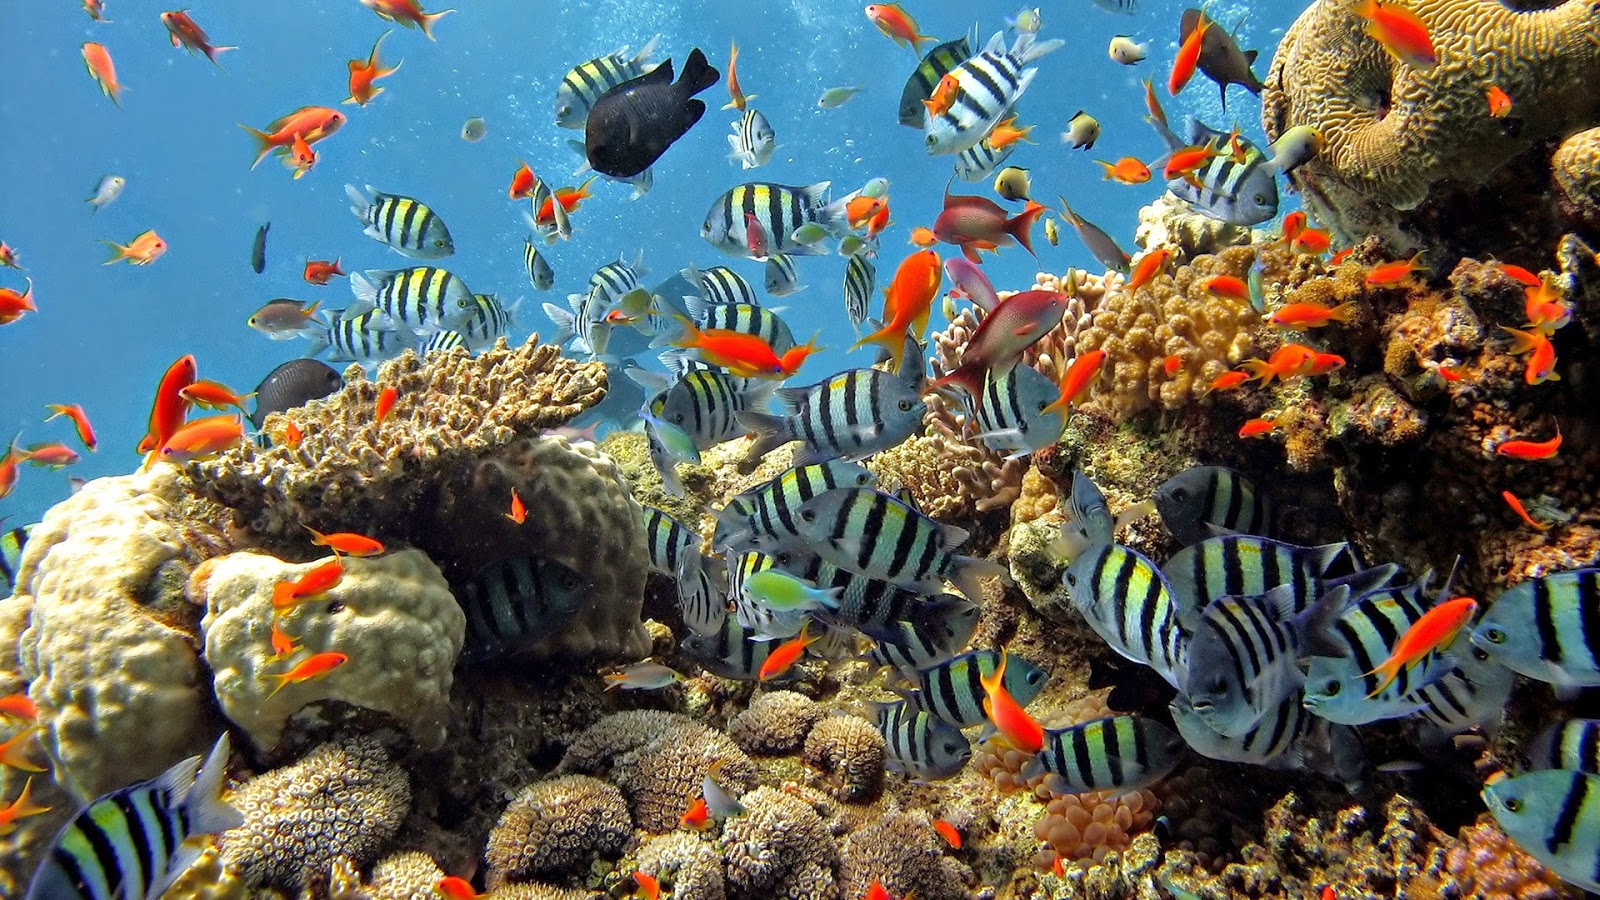 korallenriff tapete hd,korallenriff,riff,korallenrifffische,unter wasser,meeresbiologie